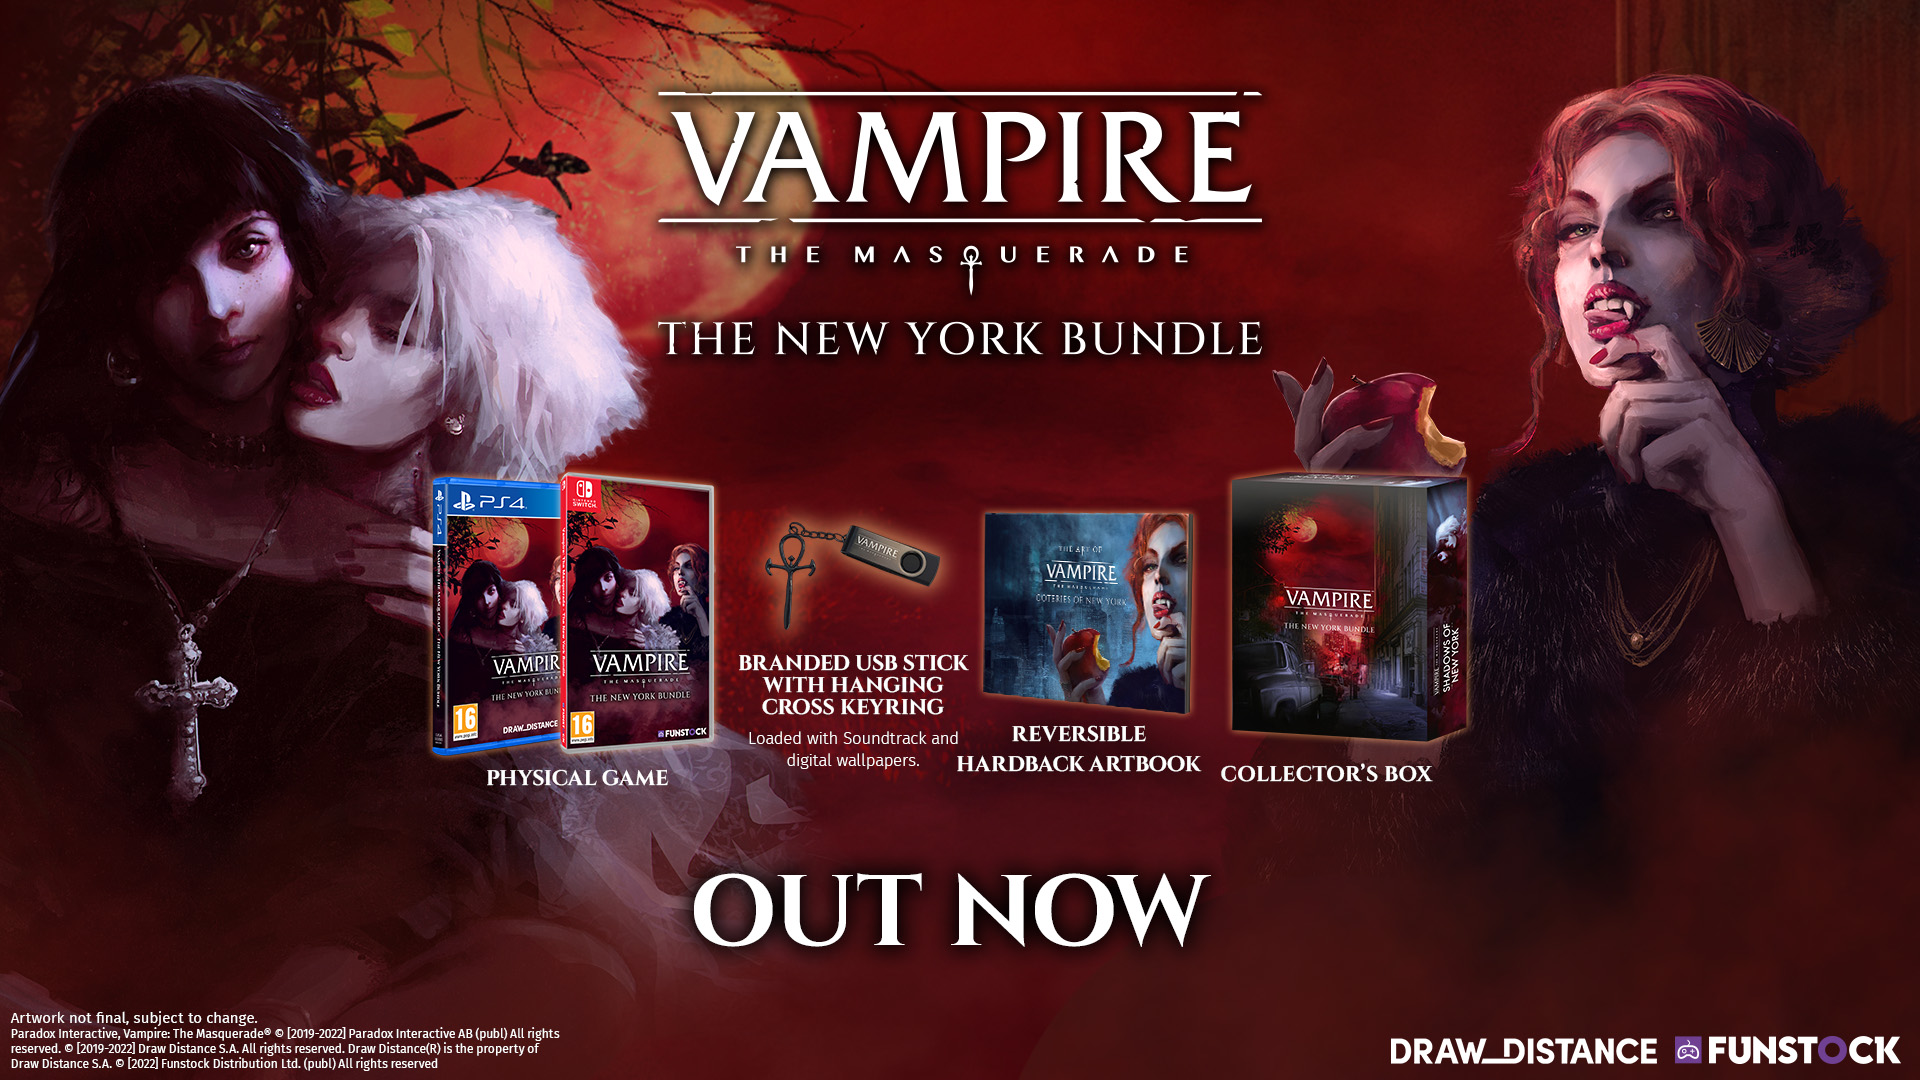 Win a Vampire The Masquerade – New York Bundle Collector's Edition!